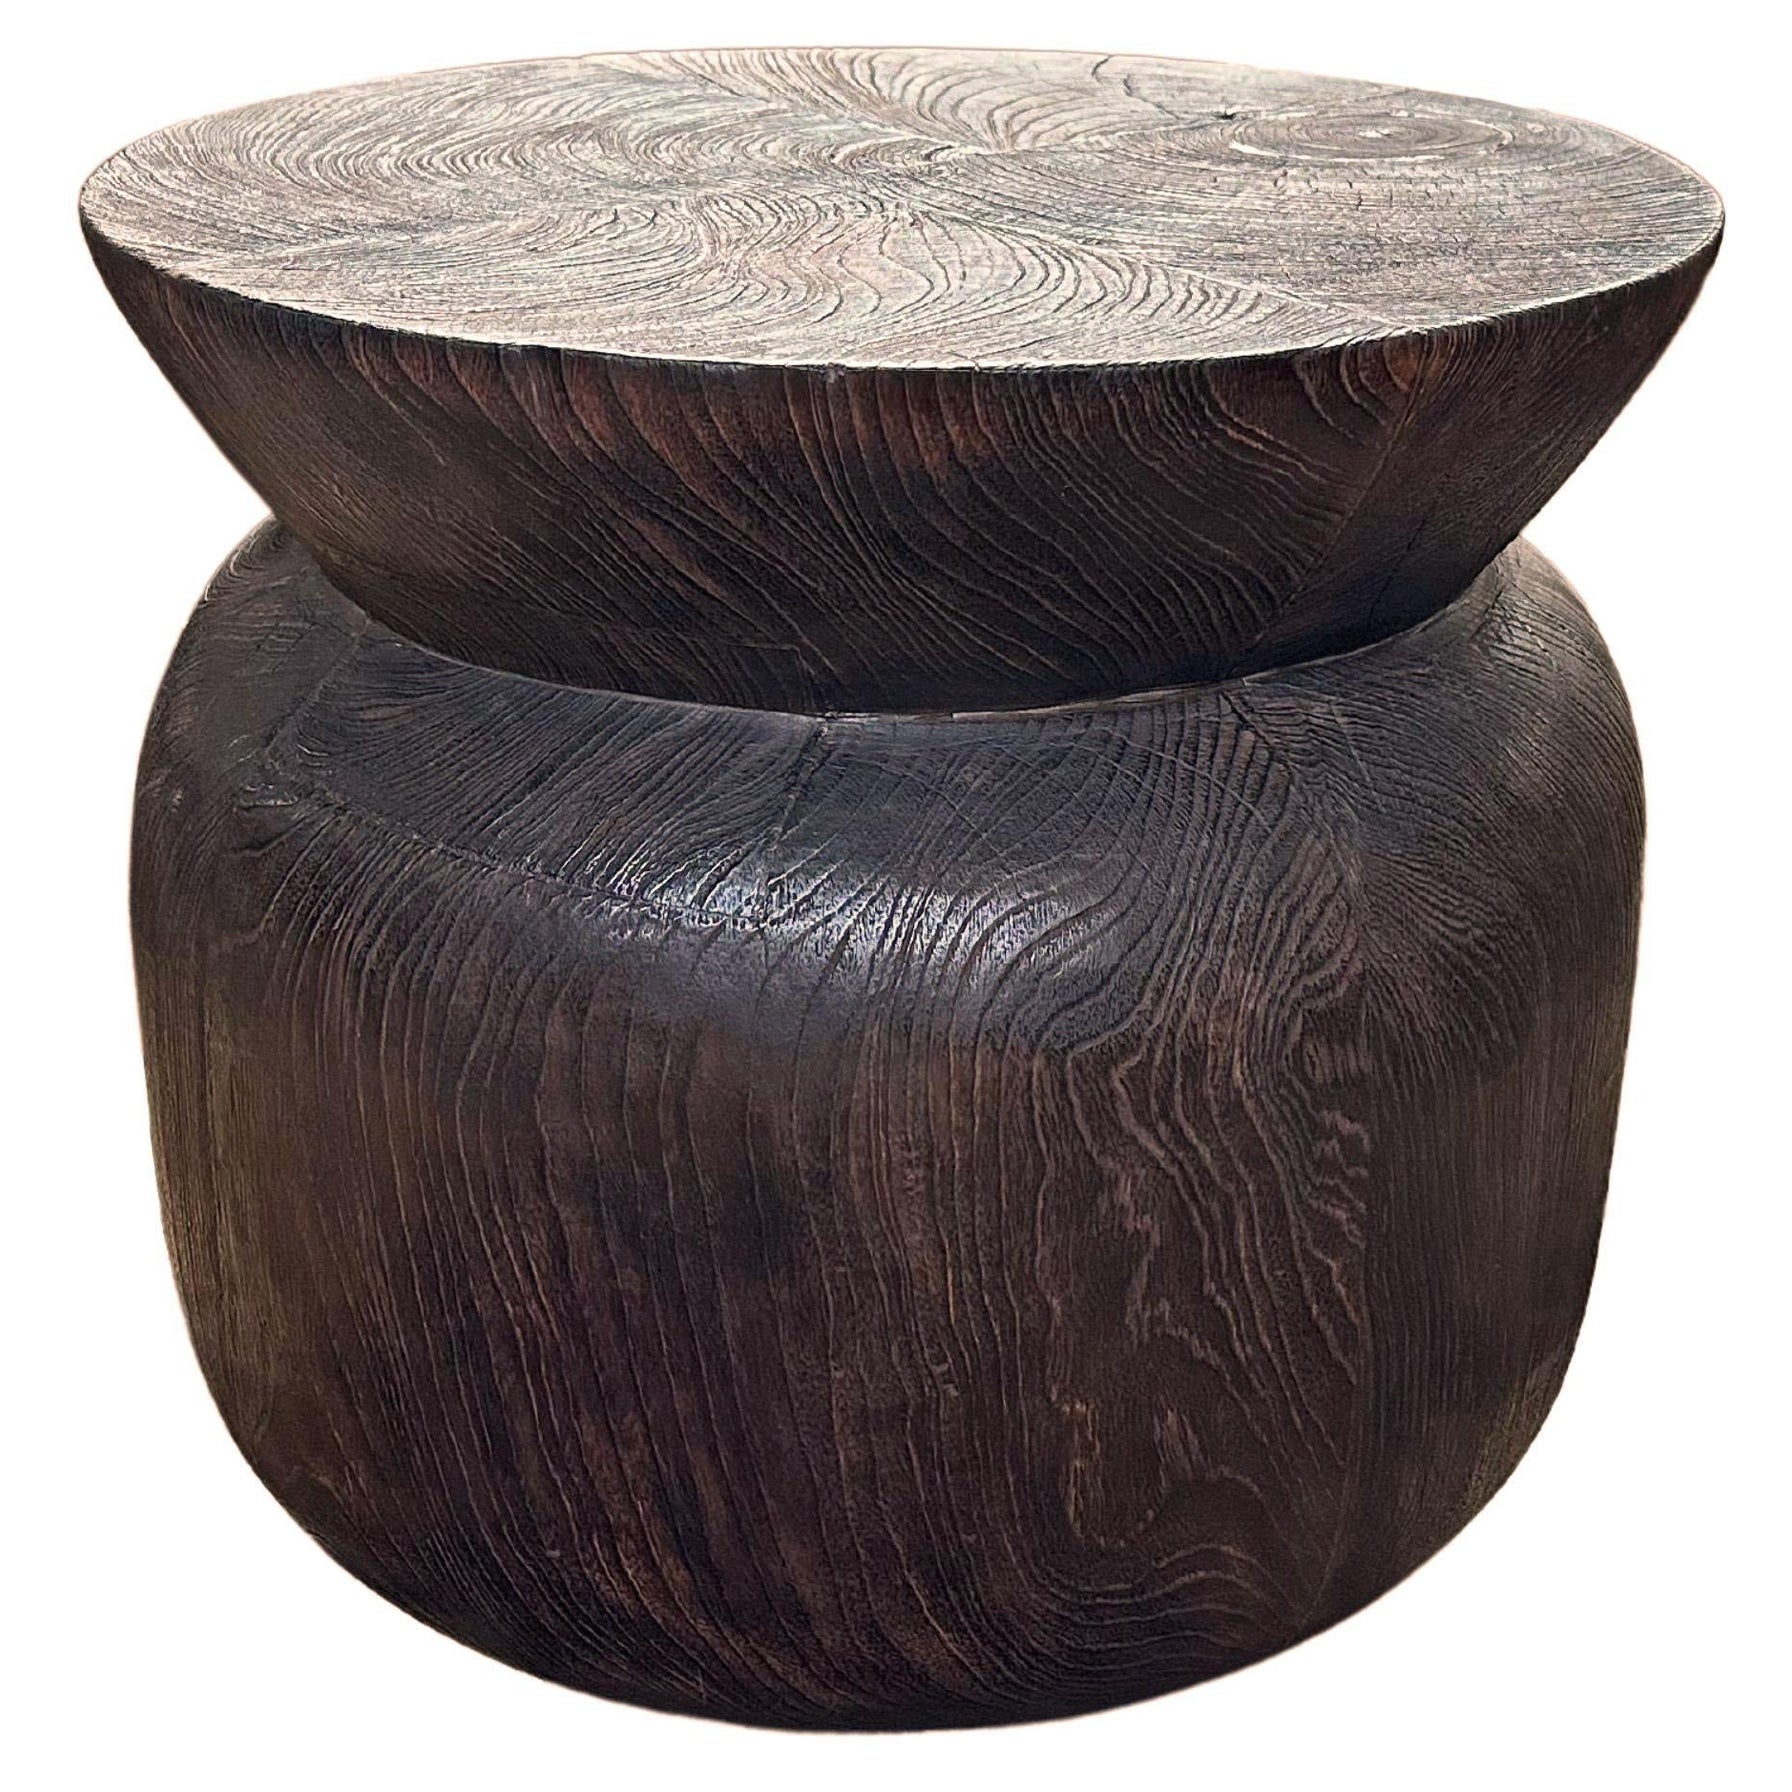 Sculptural Round Teak Wood Side Table, Burnt Finish, Modern Organic For Sale